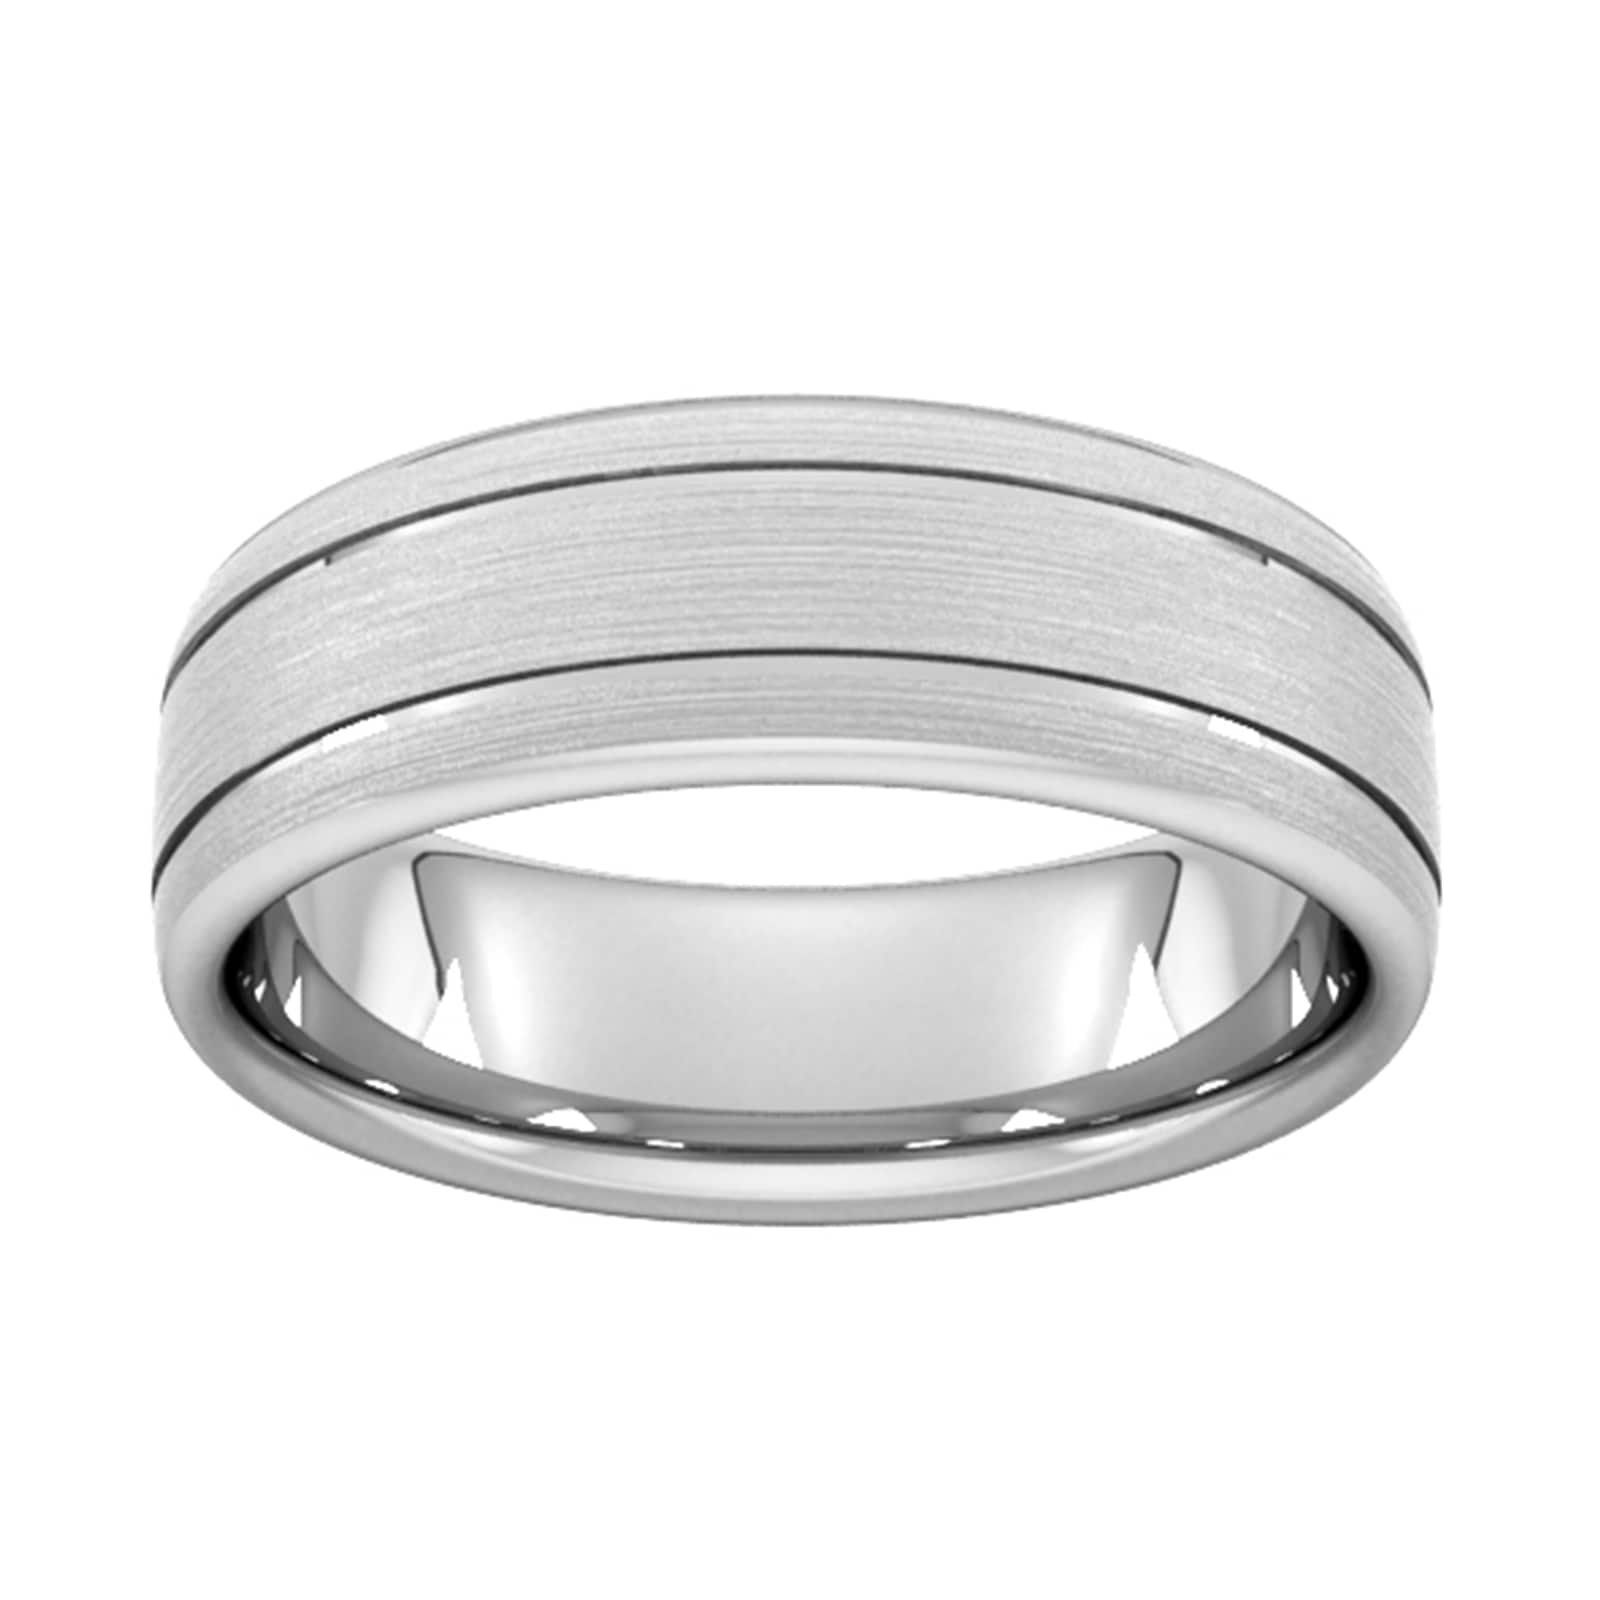 7mm Slight Court Standard Matt Finish With Double Grooves Wedding Ring In 950 Palladium - Ring Size V